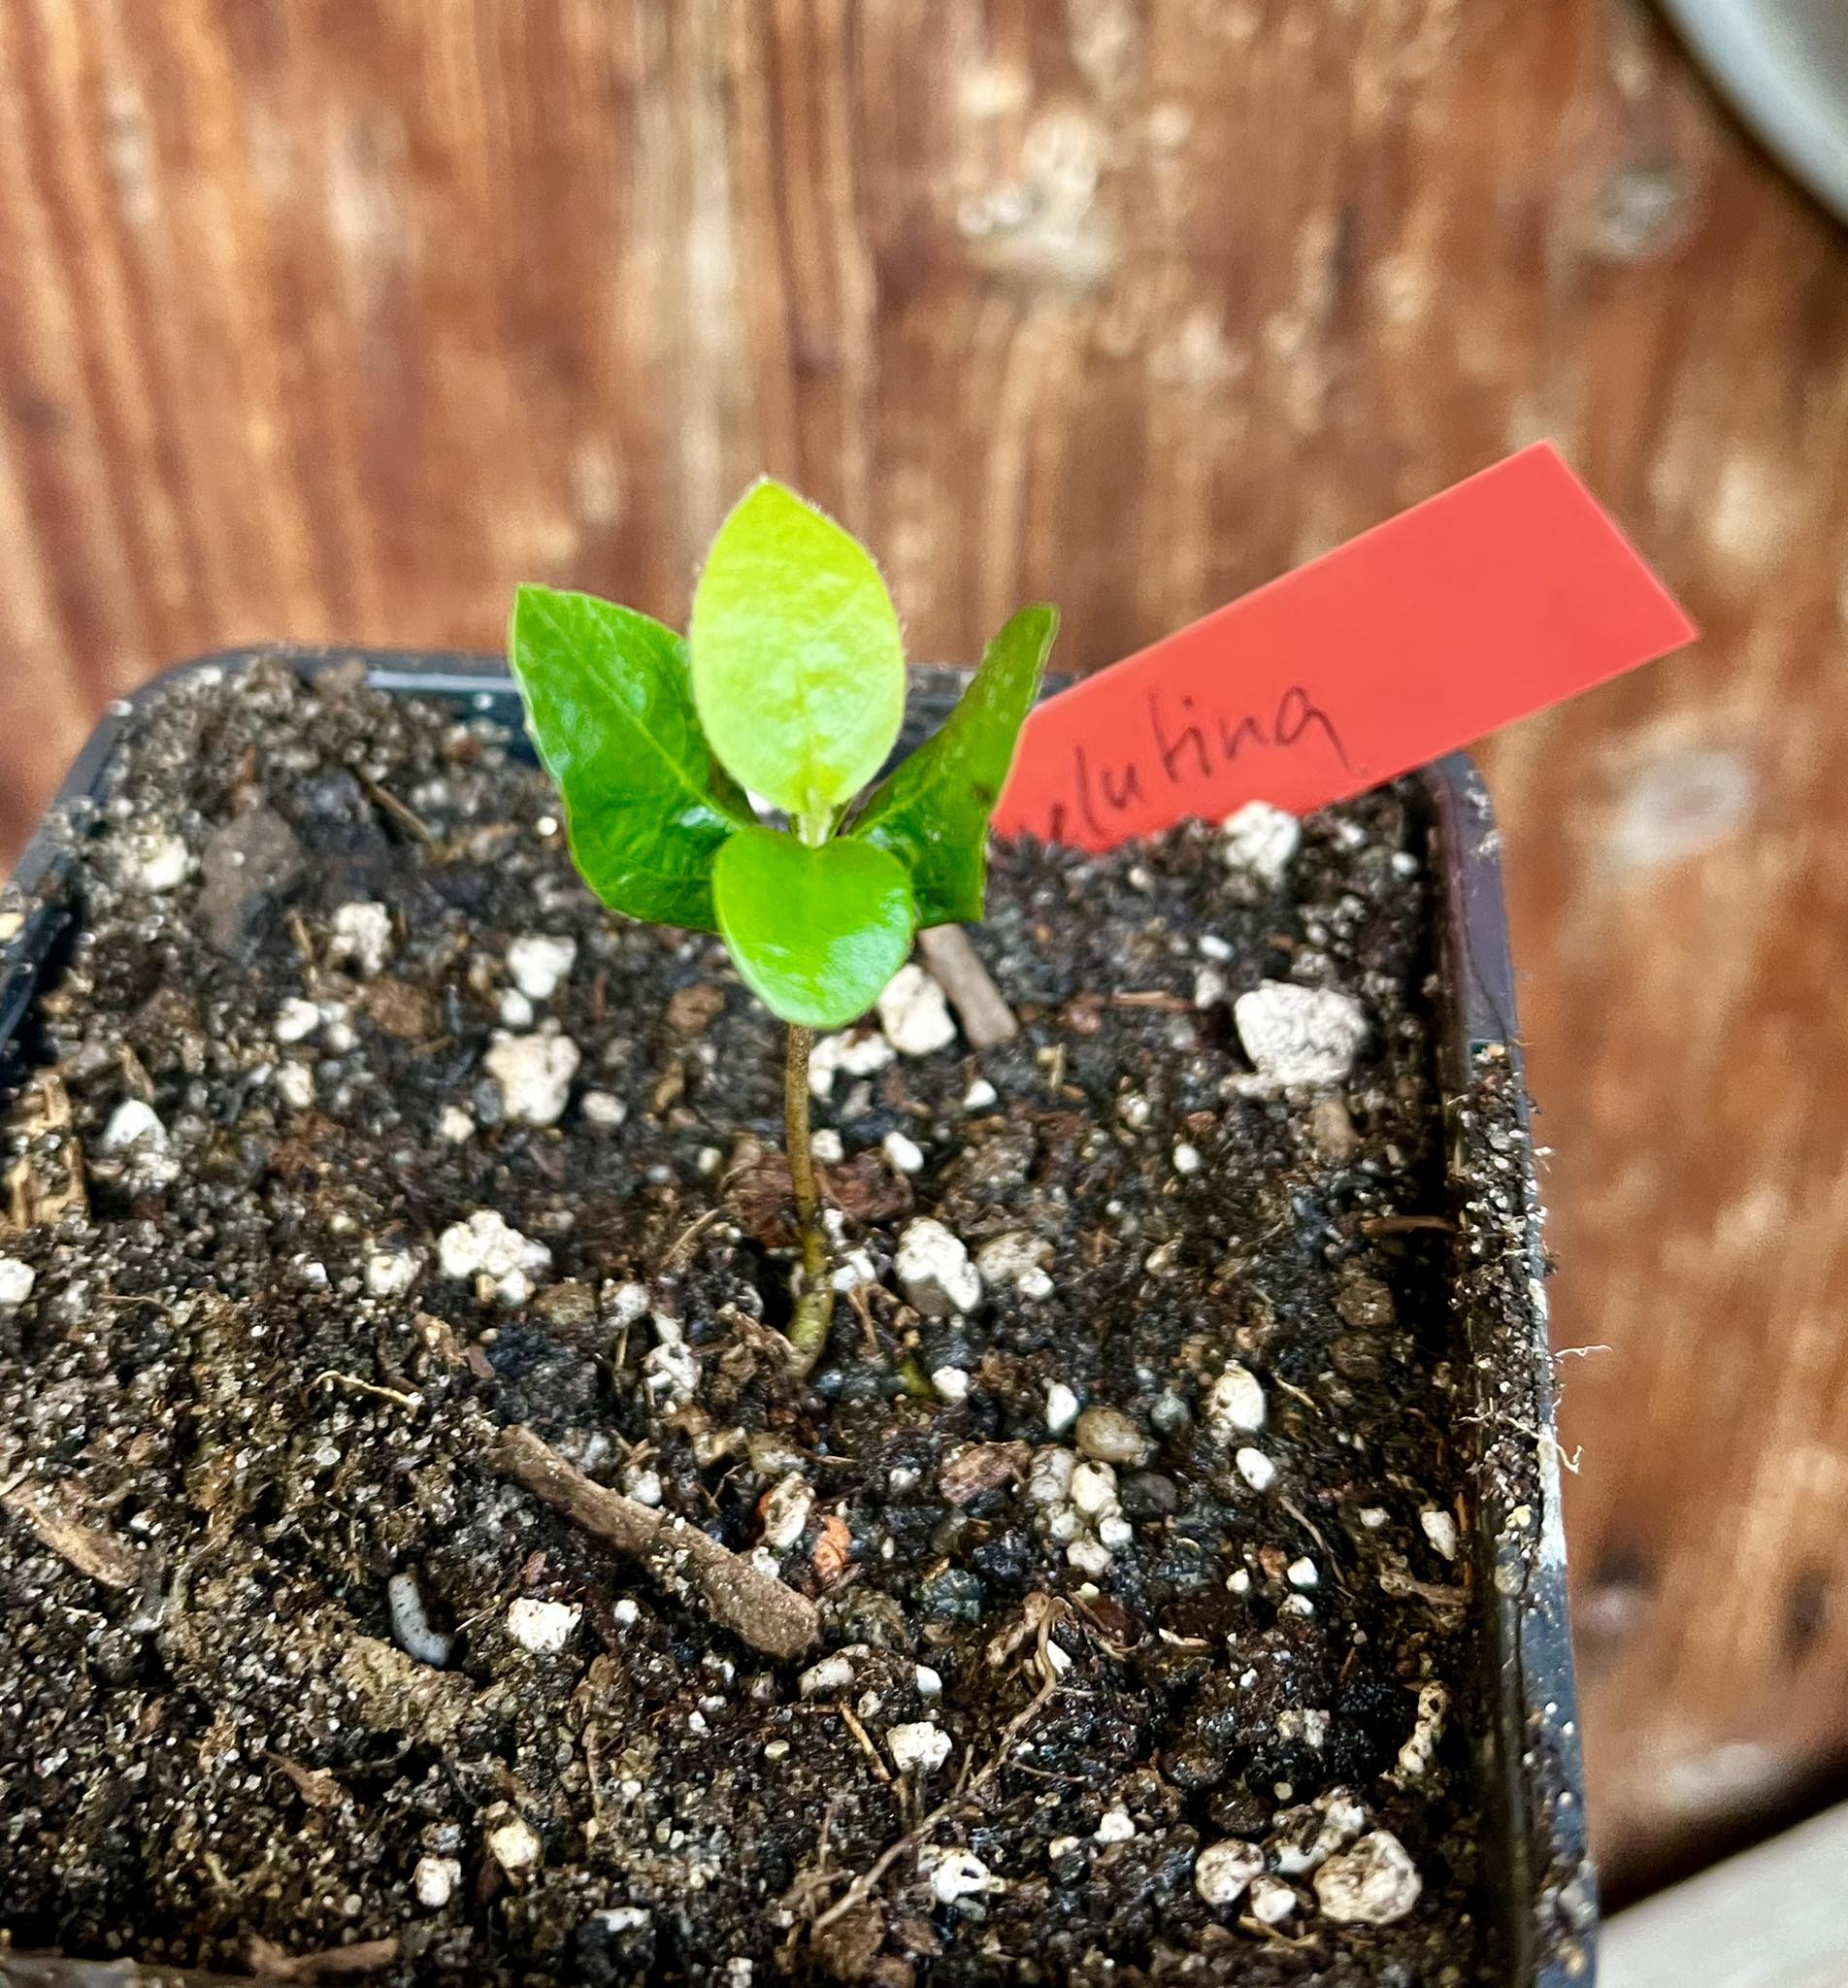 Miliusa velutina 1 small potted plant, 1 kleine, getopfte Pflanze